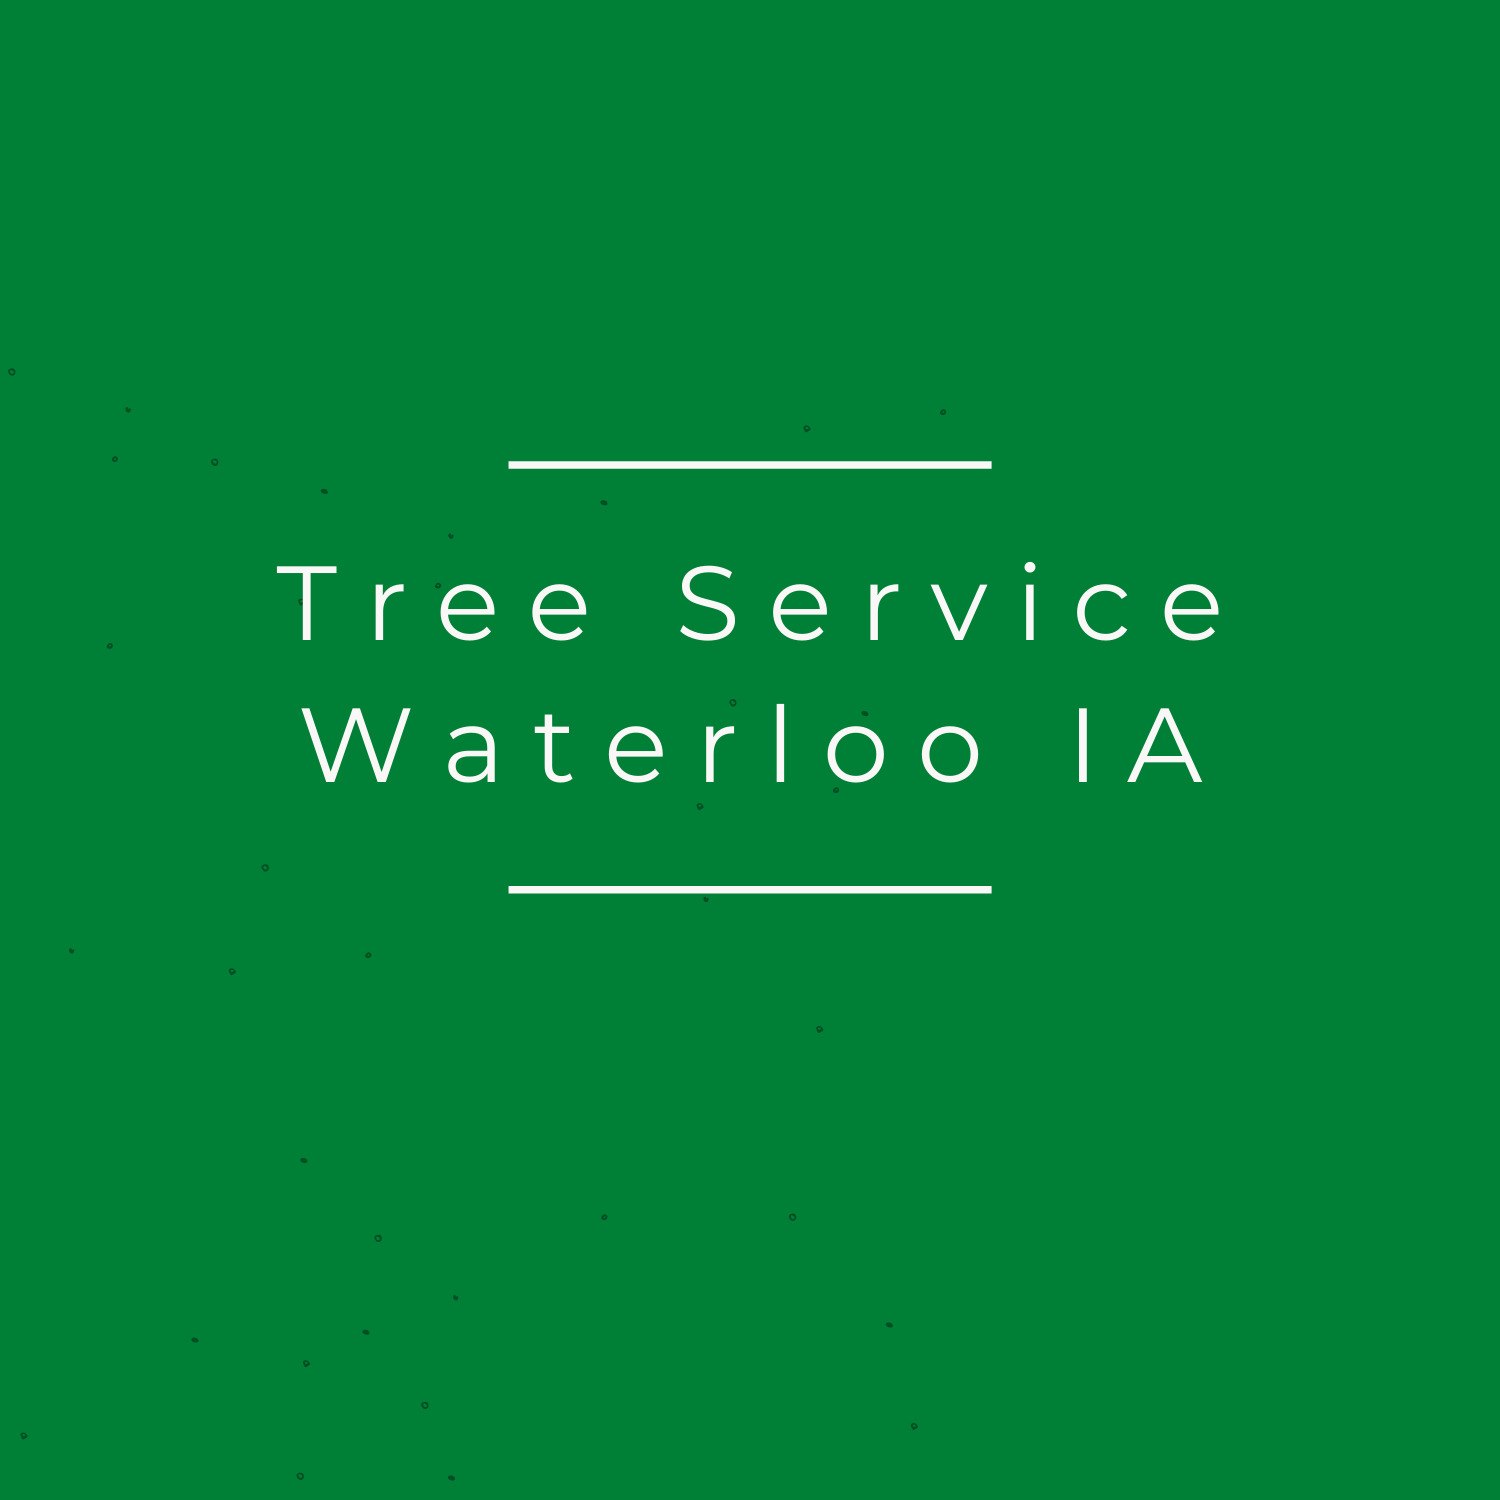 Tree Service of Waterloo IA